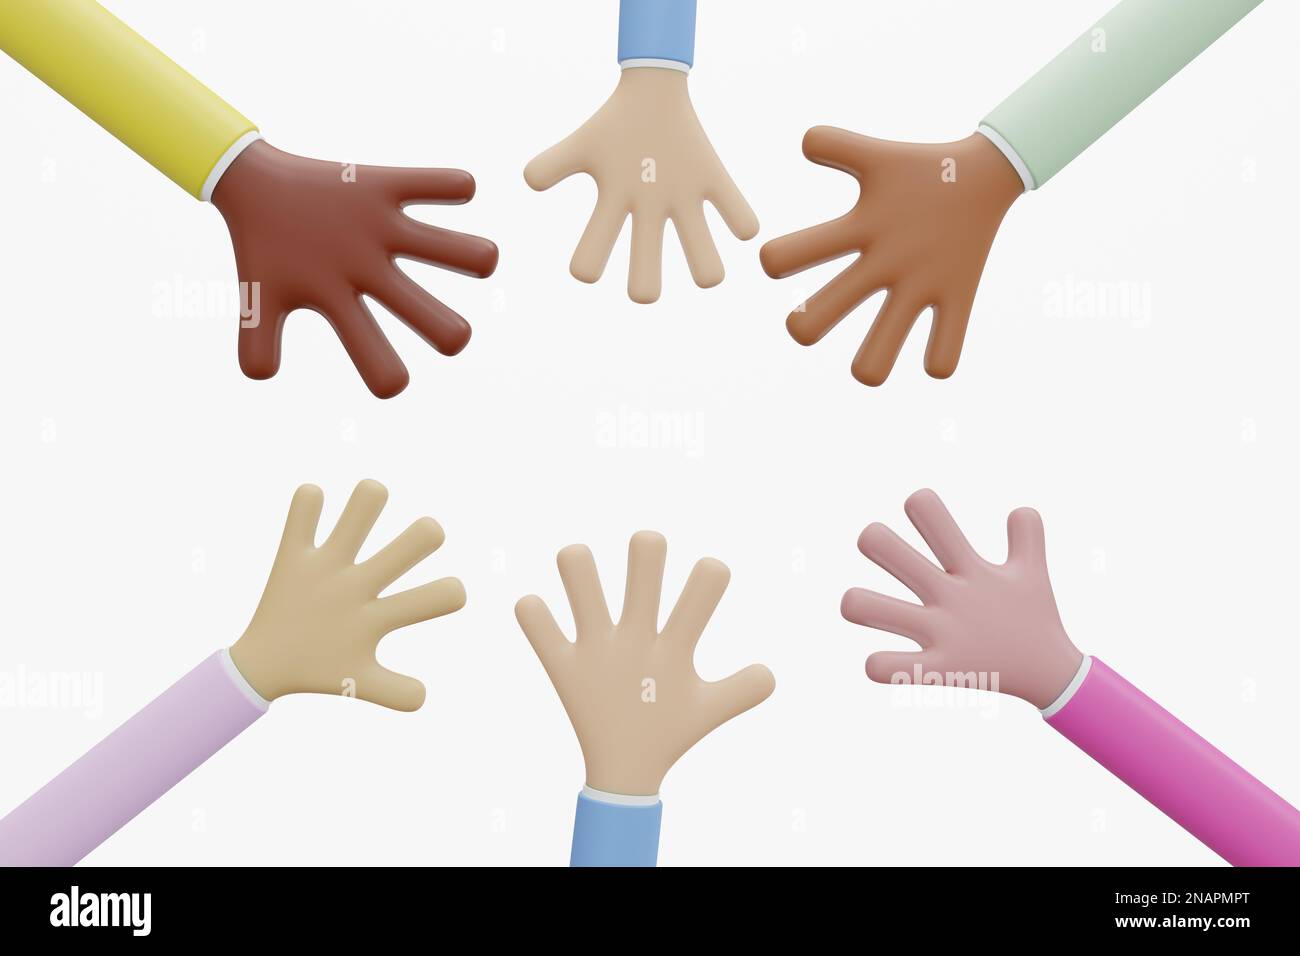 https://c8.alamy.com/comp/2NAPMPT/cartoons-hands-diversity-concept-of-different-skin-colour-working-together-3d-illustration-2NAPMPT.jpg